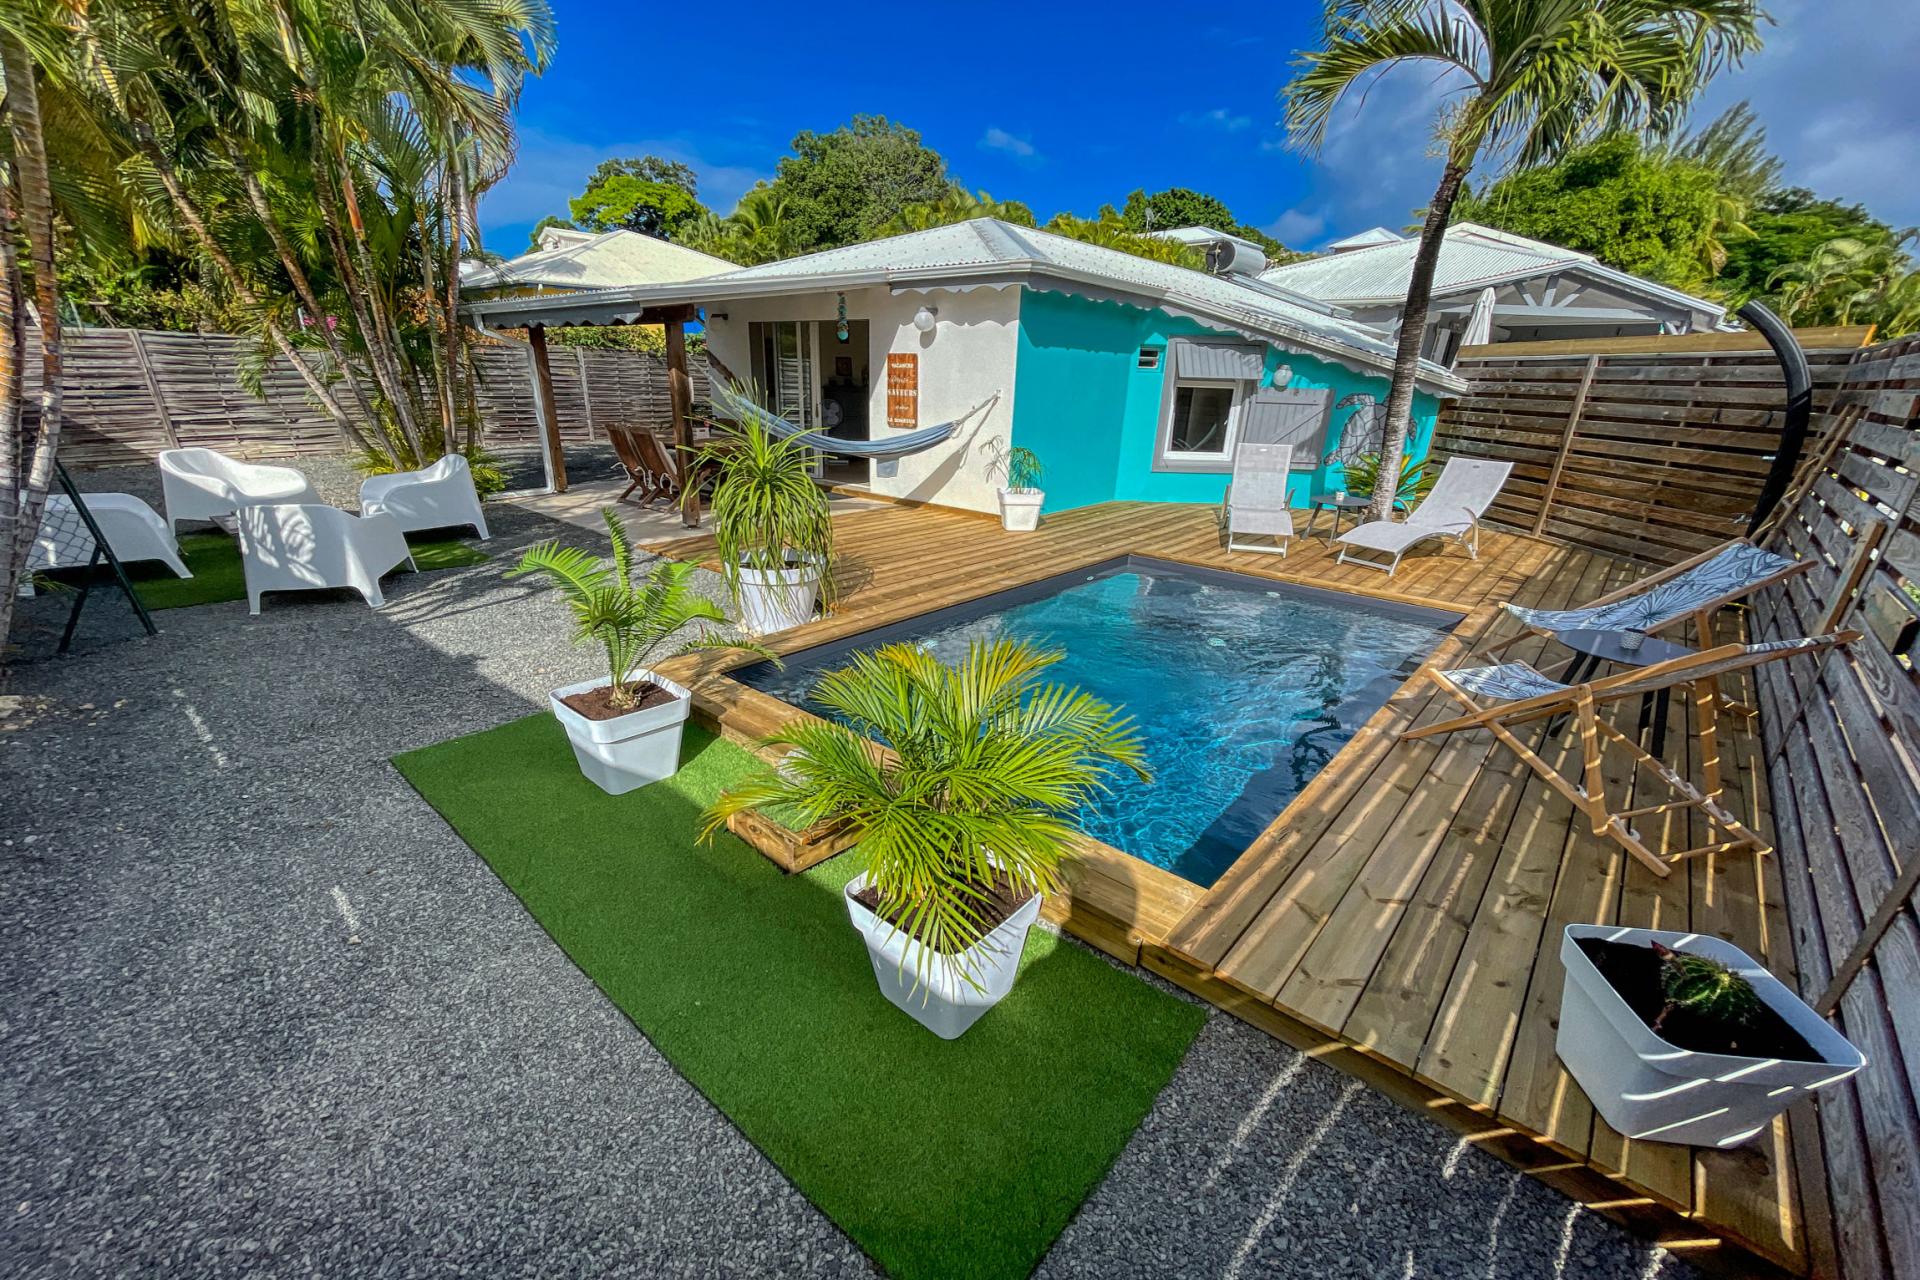 Rental villa Guadeloupe - swimming pool